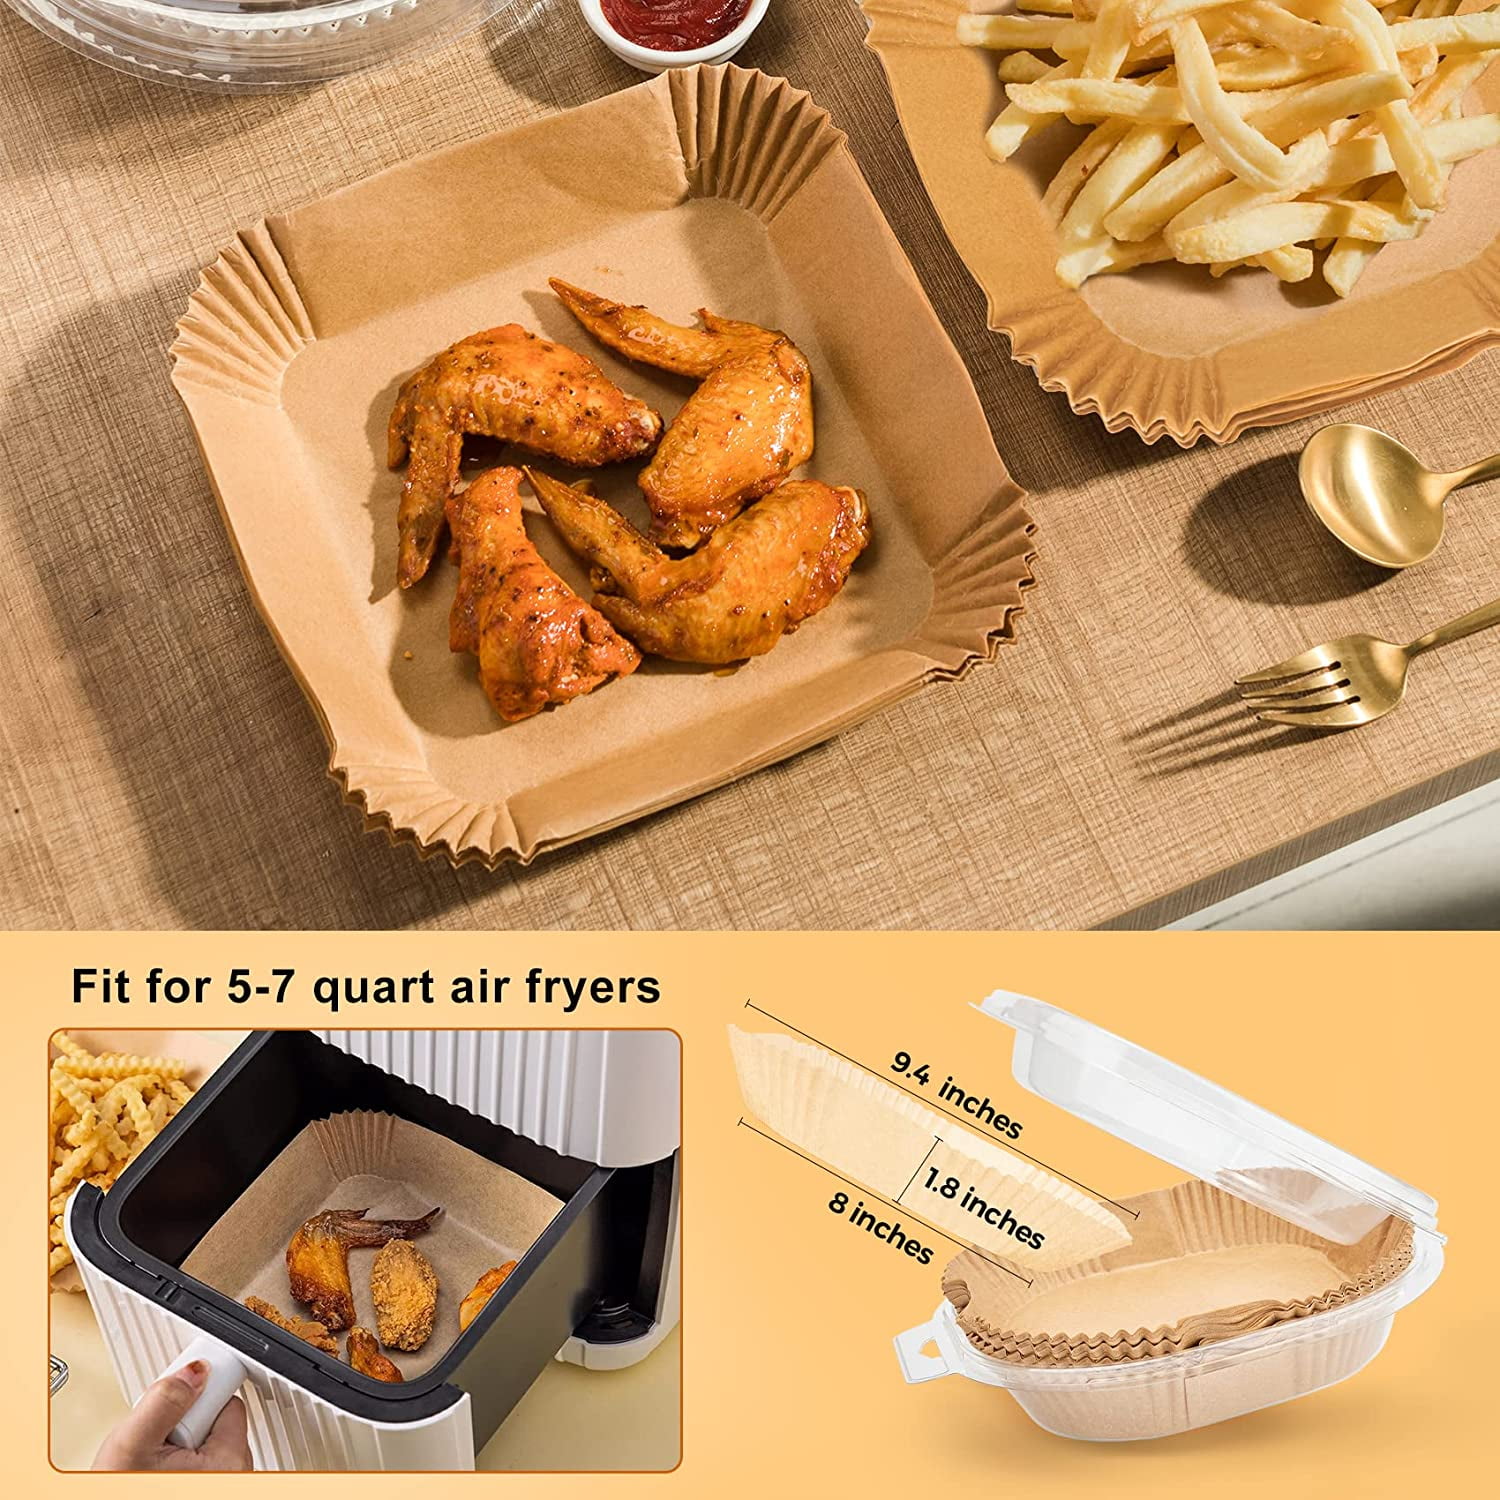 10 Inch Air Fryer Disposable Paper Liner Round, [ XXL Size] 100Pcs Air  Fryer Parchment Paper Liners for 7QT Air Fryer, Non-stick, Food Grade  Baking